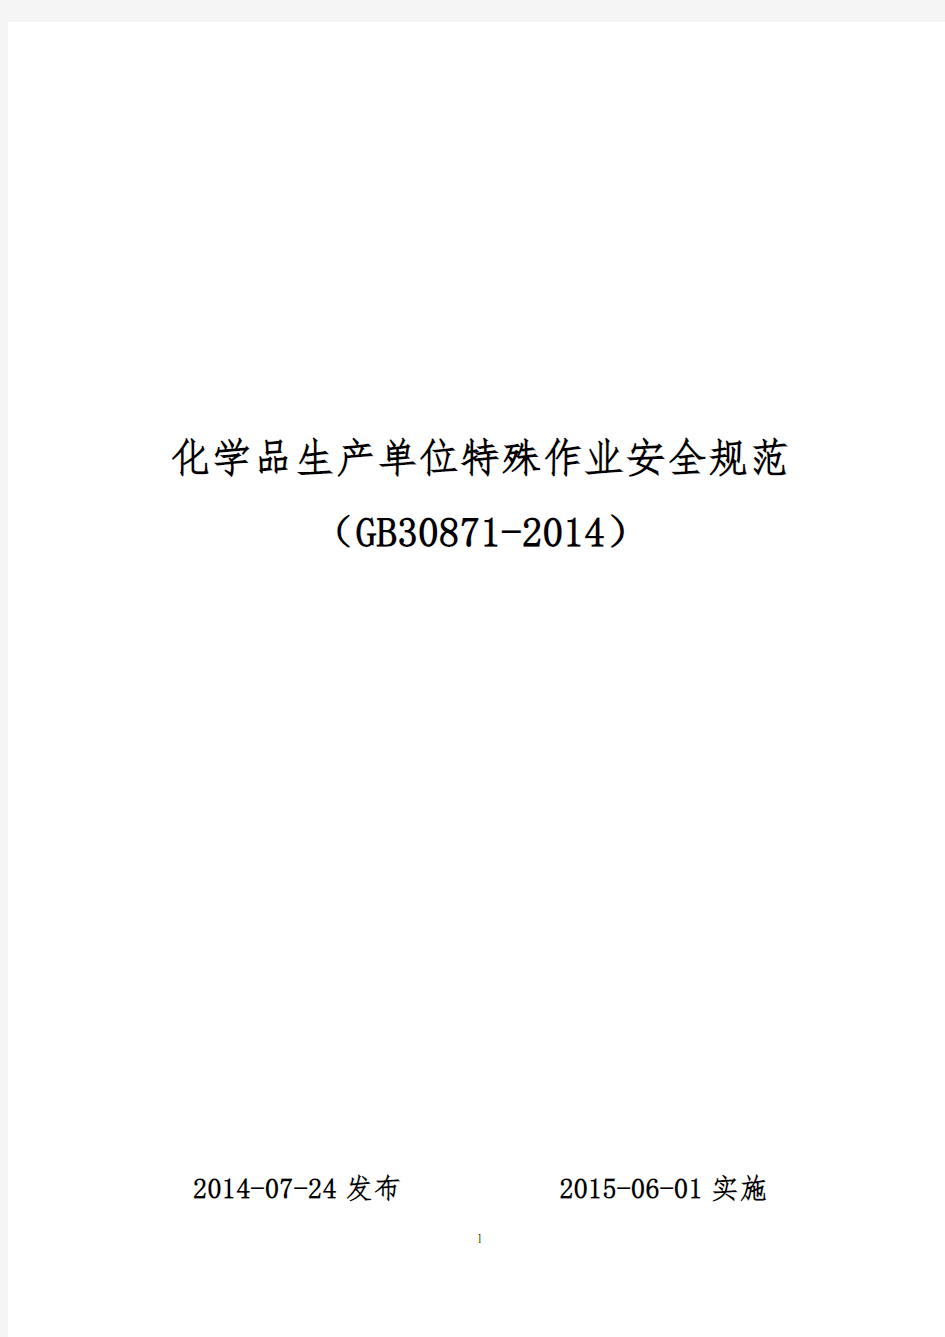 GB30871-2014化学品生产单位特殊作业安全规范